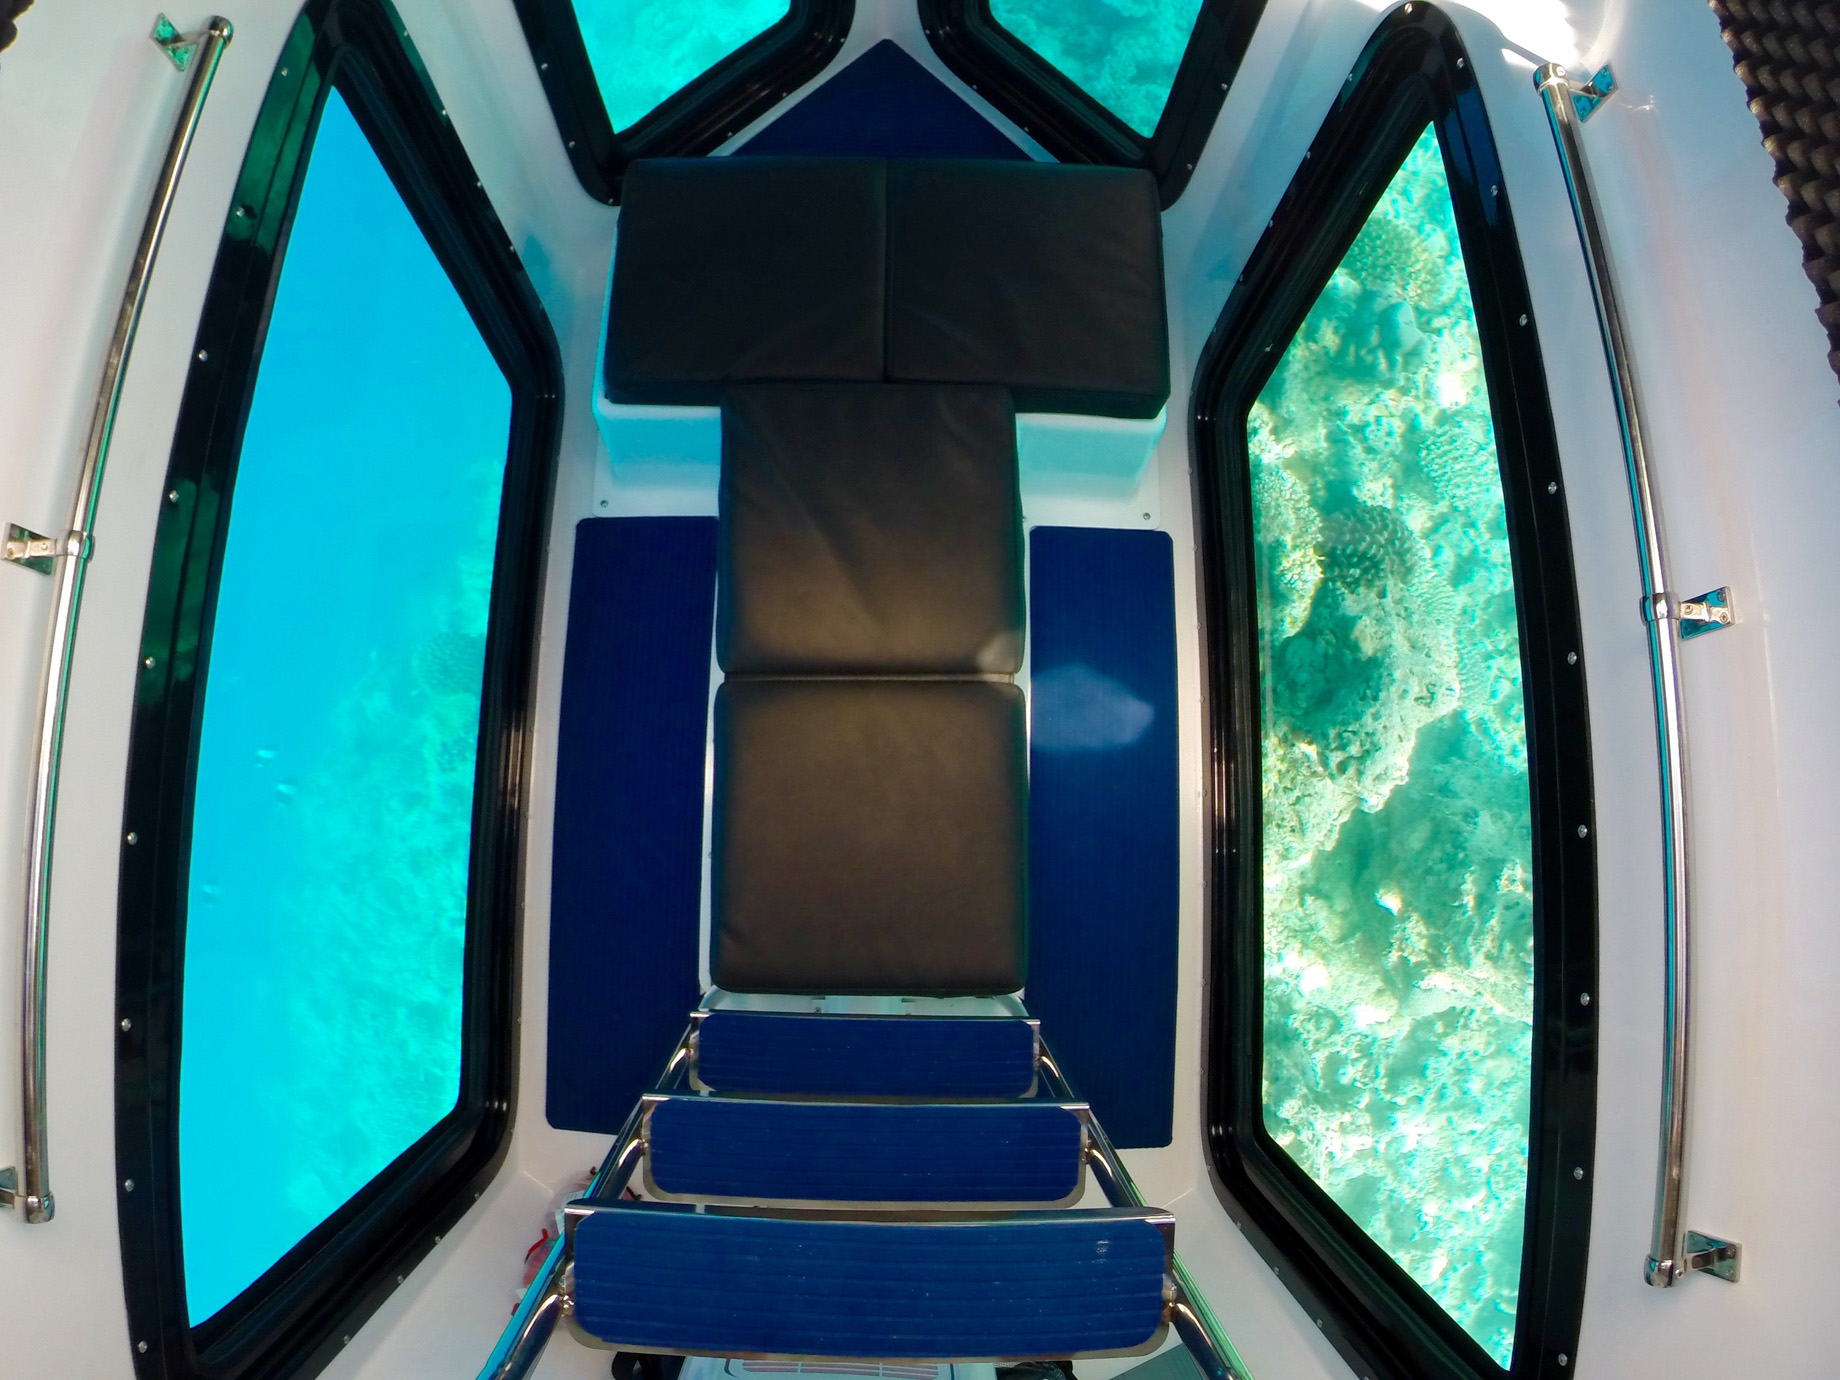 Amilla Fushi Resort and Residences – Baa Atoll, Maldives – Penguin Glass Bottom Boat Interior Seating